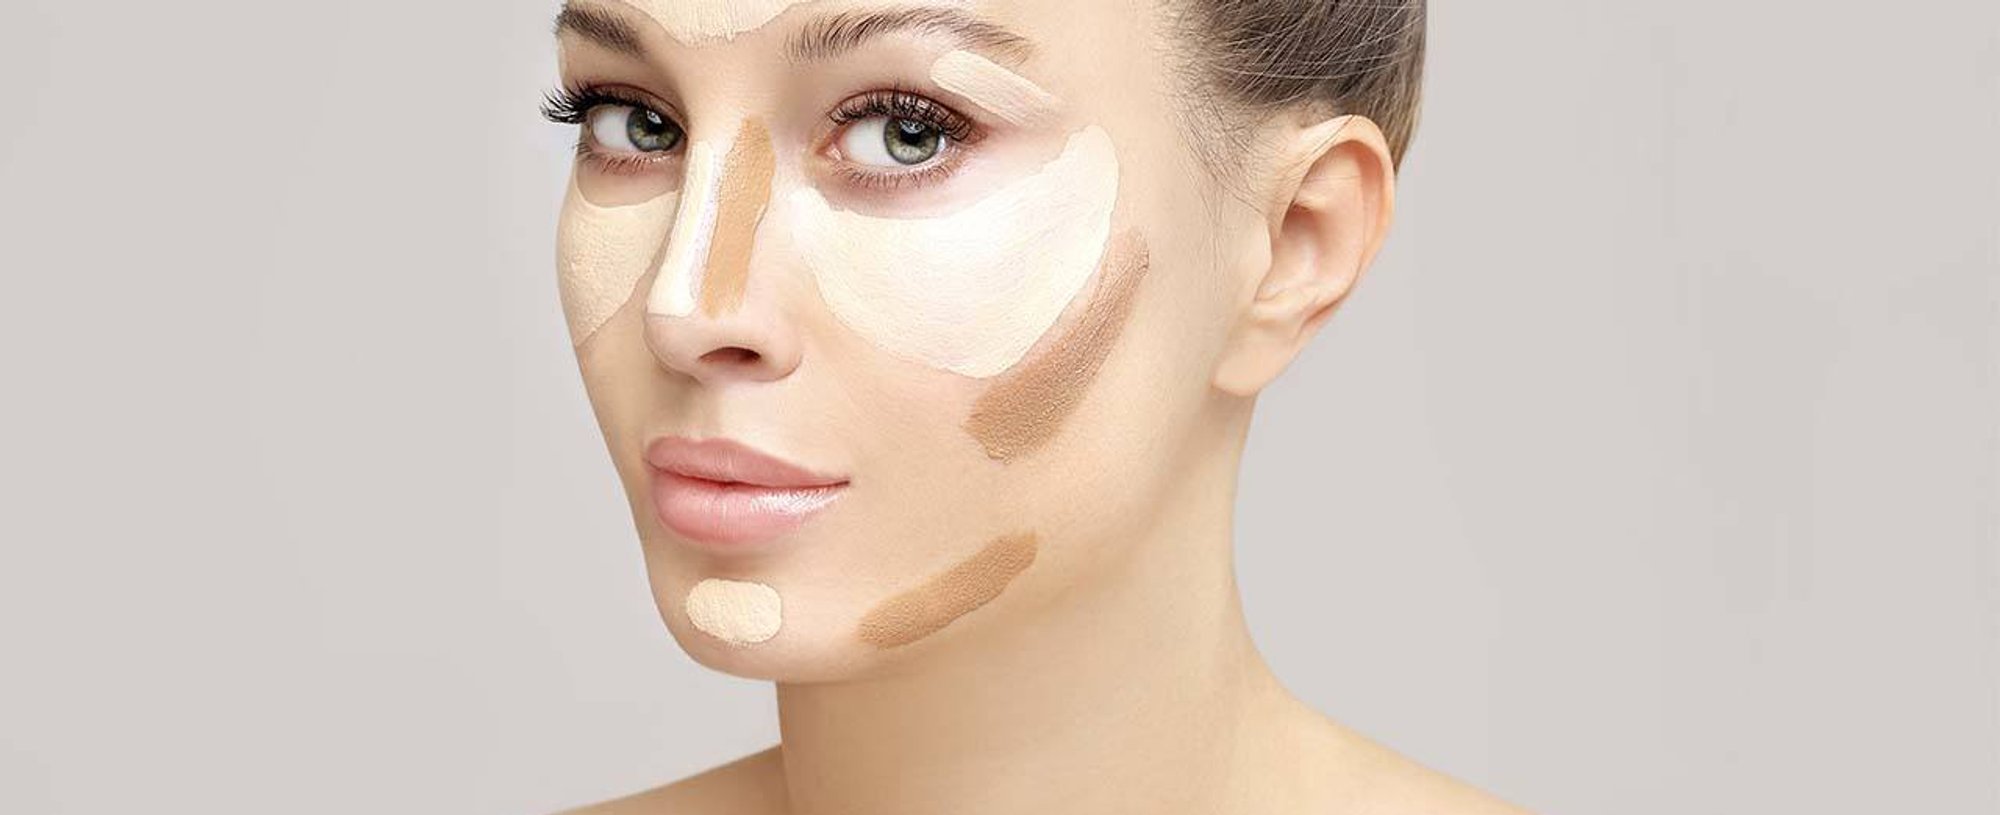 The Right Way to Contour for Every Face Shape - L'Oréal Paris